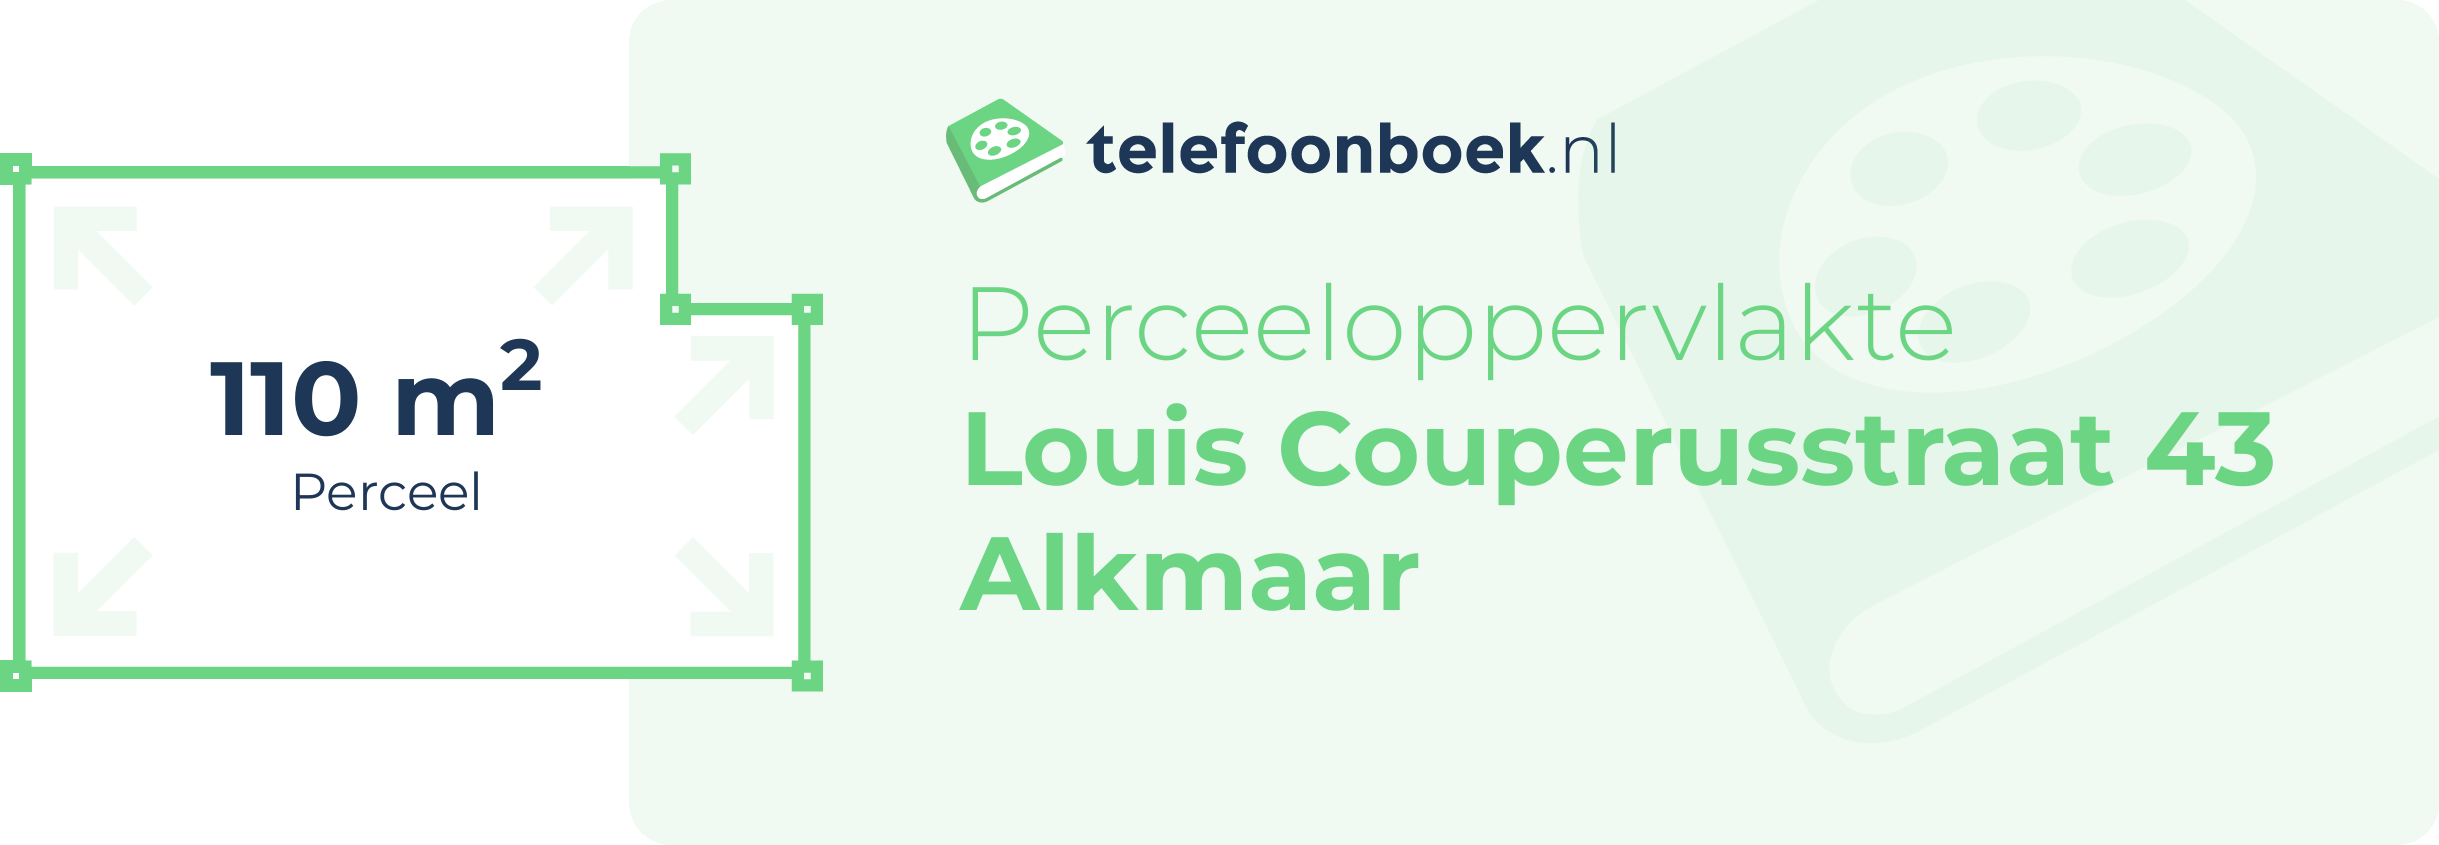 Perceeloppervlakte Louis Couperusstraat 43 Alkmaar